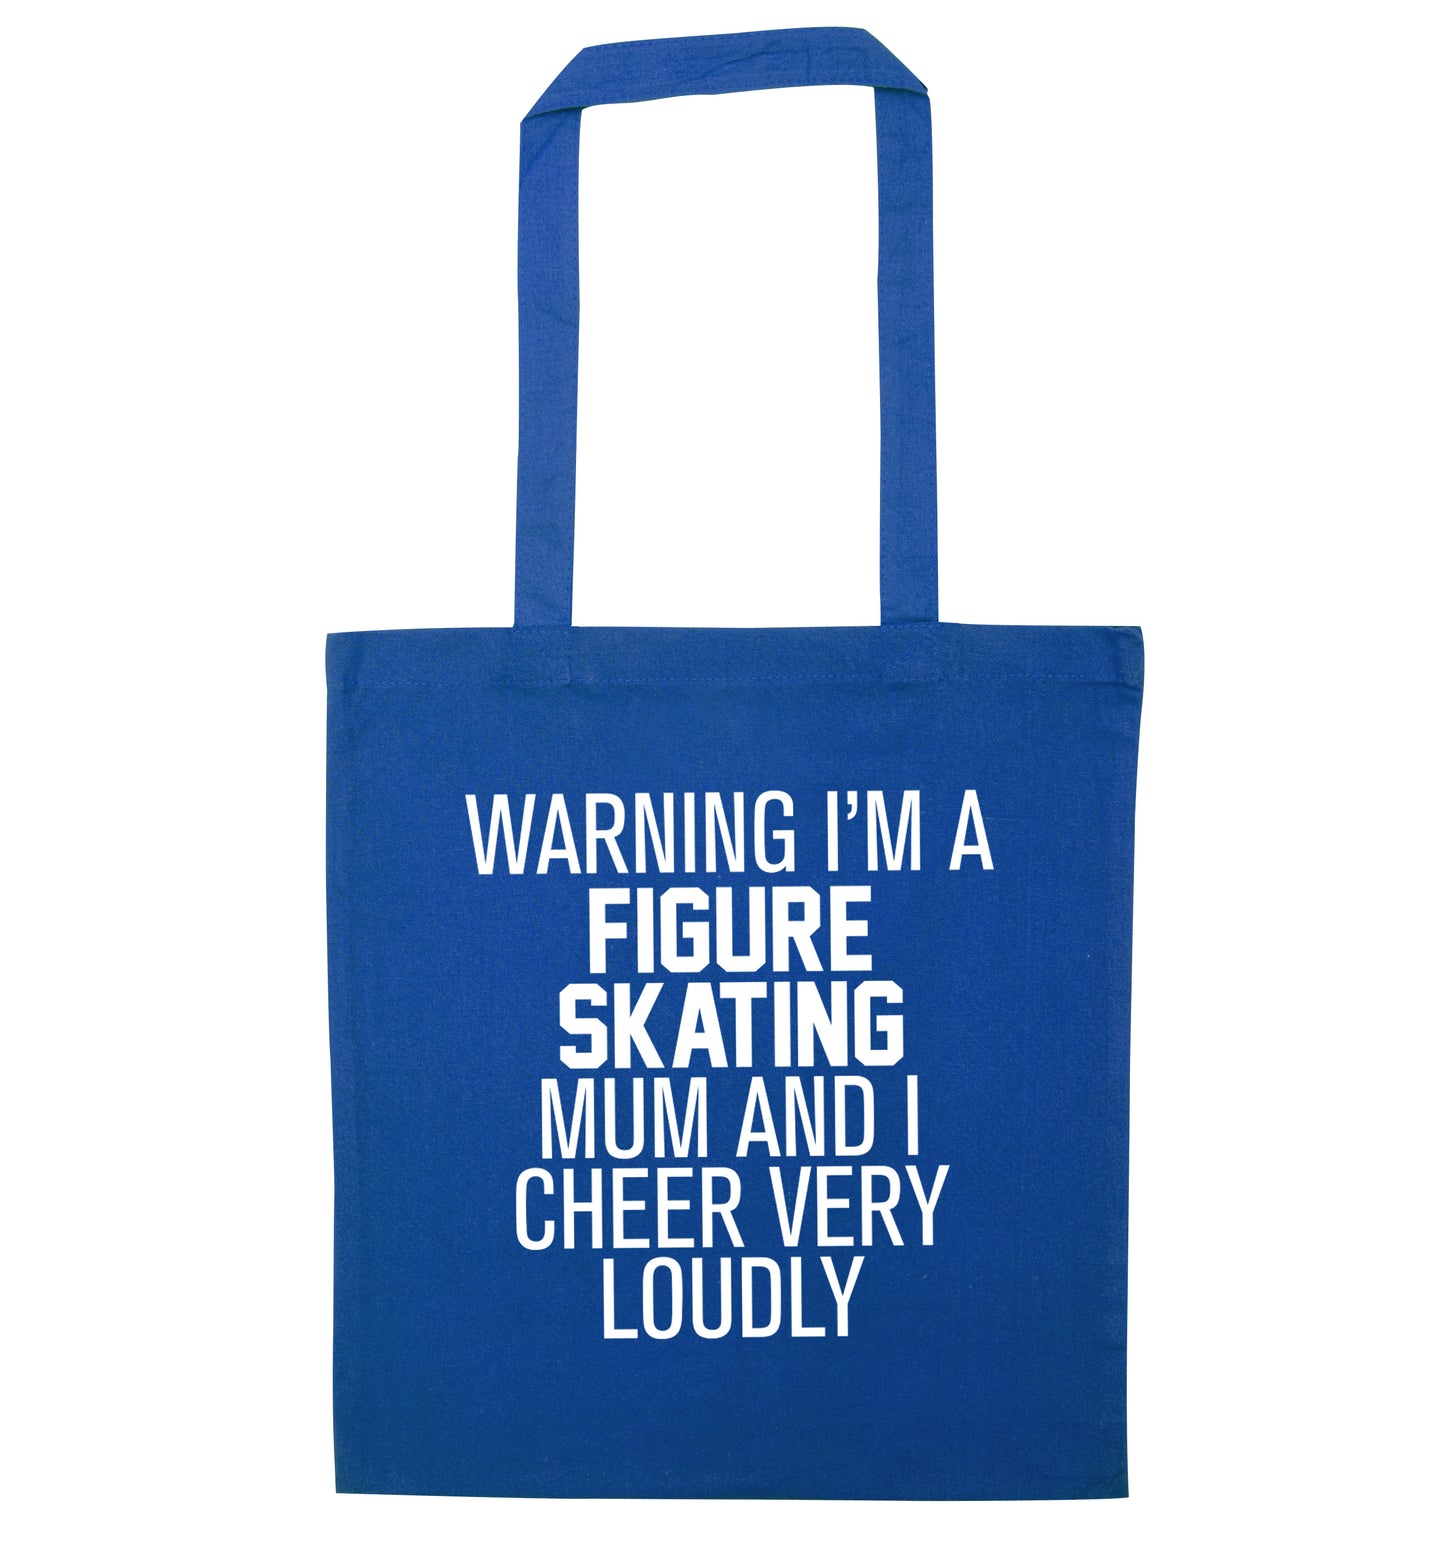 Warning I'm a figure skating mum and I cheer very loudly blue tote bag